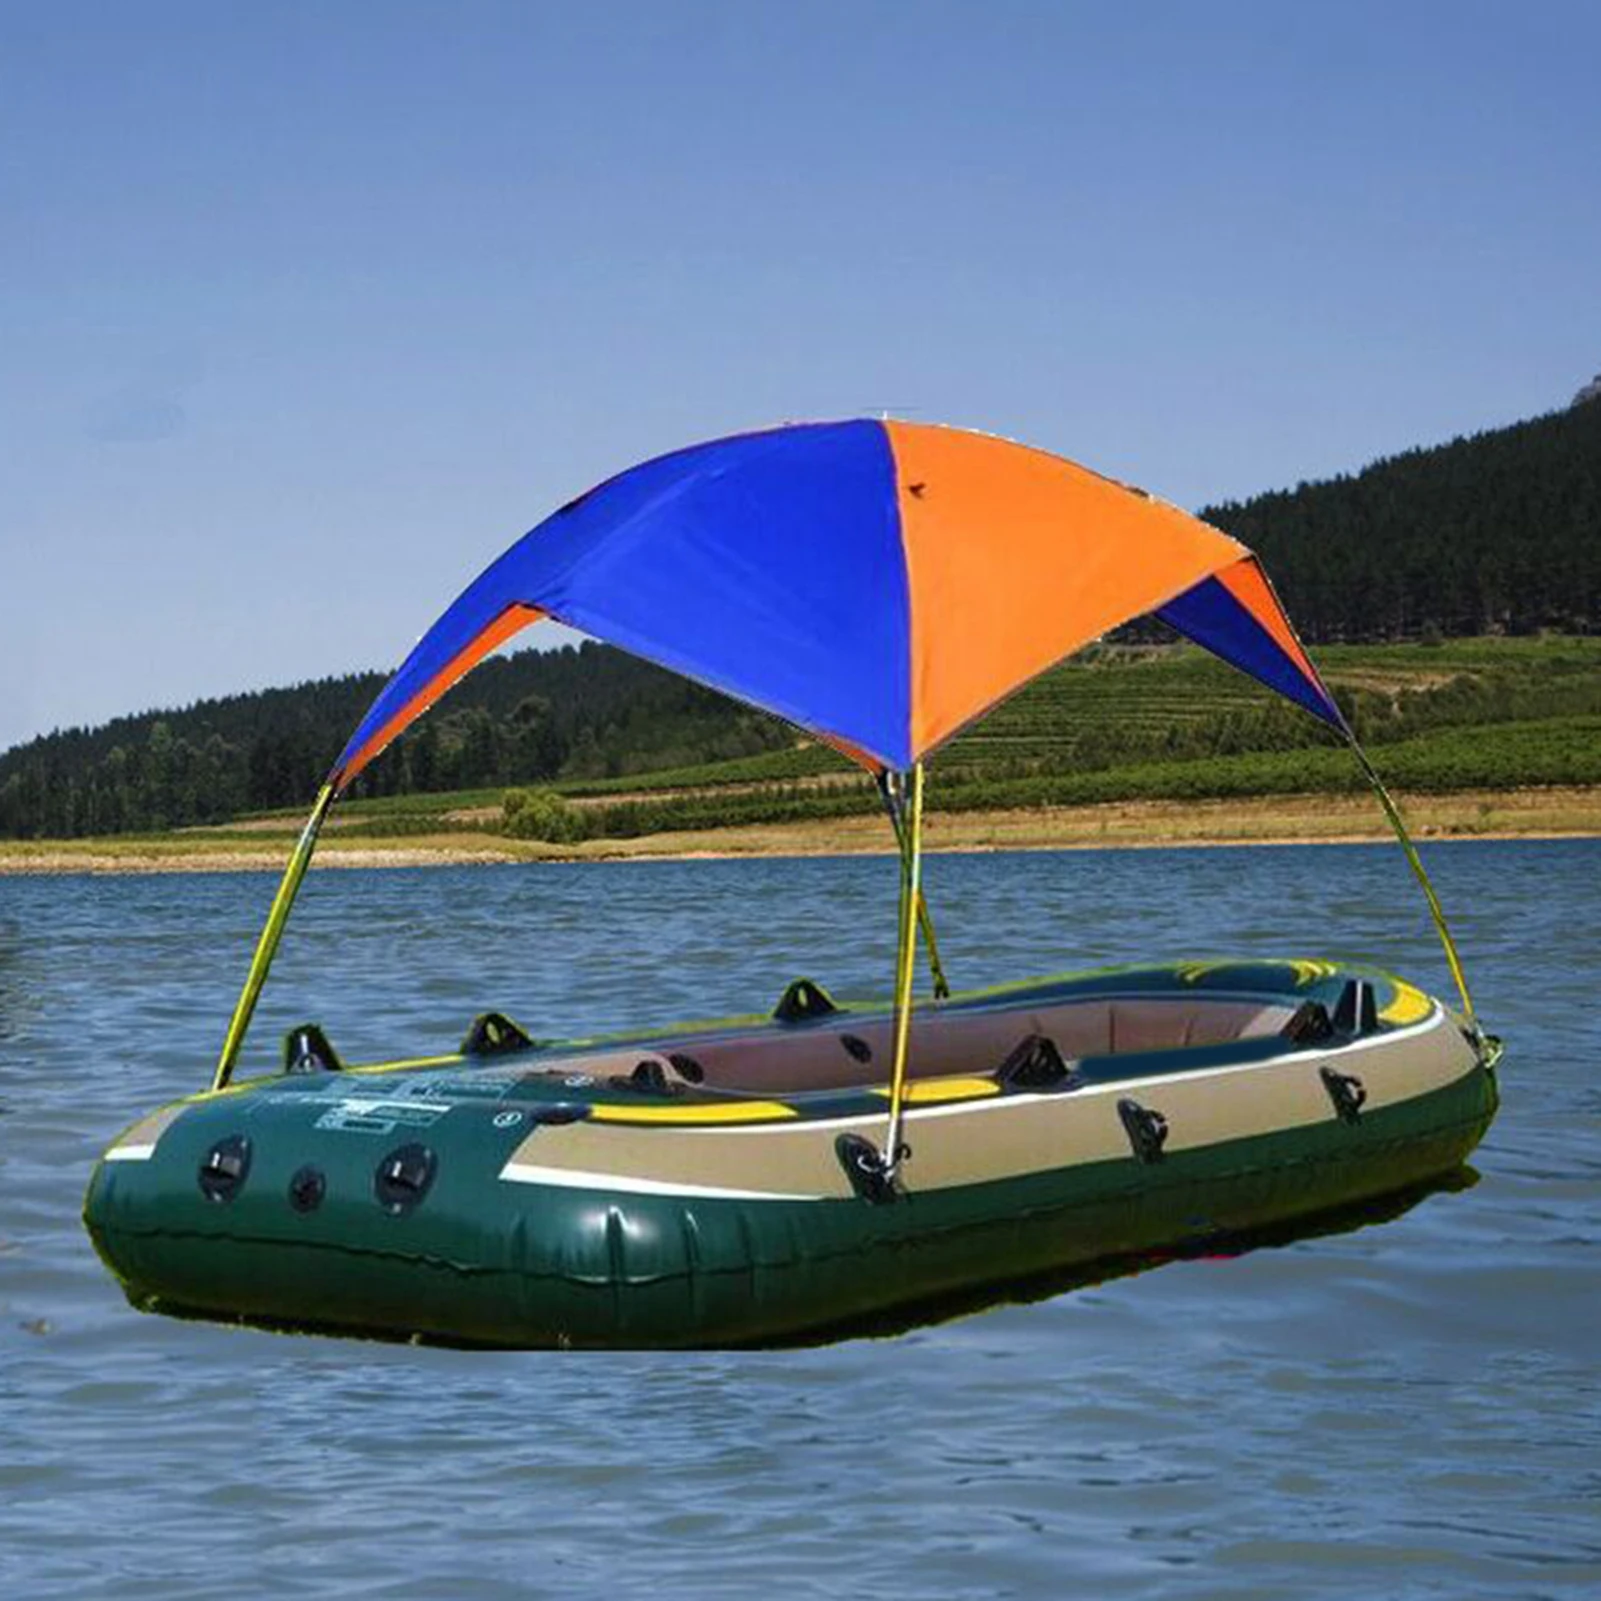 https://ae01.alicdn.com/kf/S847bf0b9899849d898a5c5ba9288cbdaS/Large-Boat-Awning-Shade-Cloth-Dinghy-Fishing-Boat-Sun-Shade-Cover-Canopy-kayak-Sunshade-Tent-Shelter.jpg